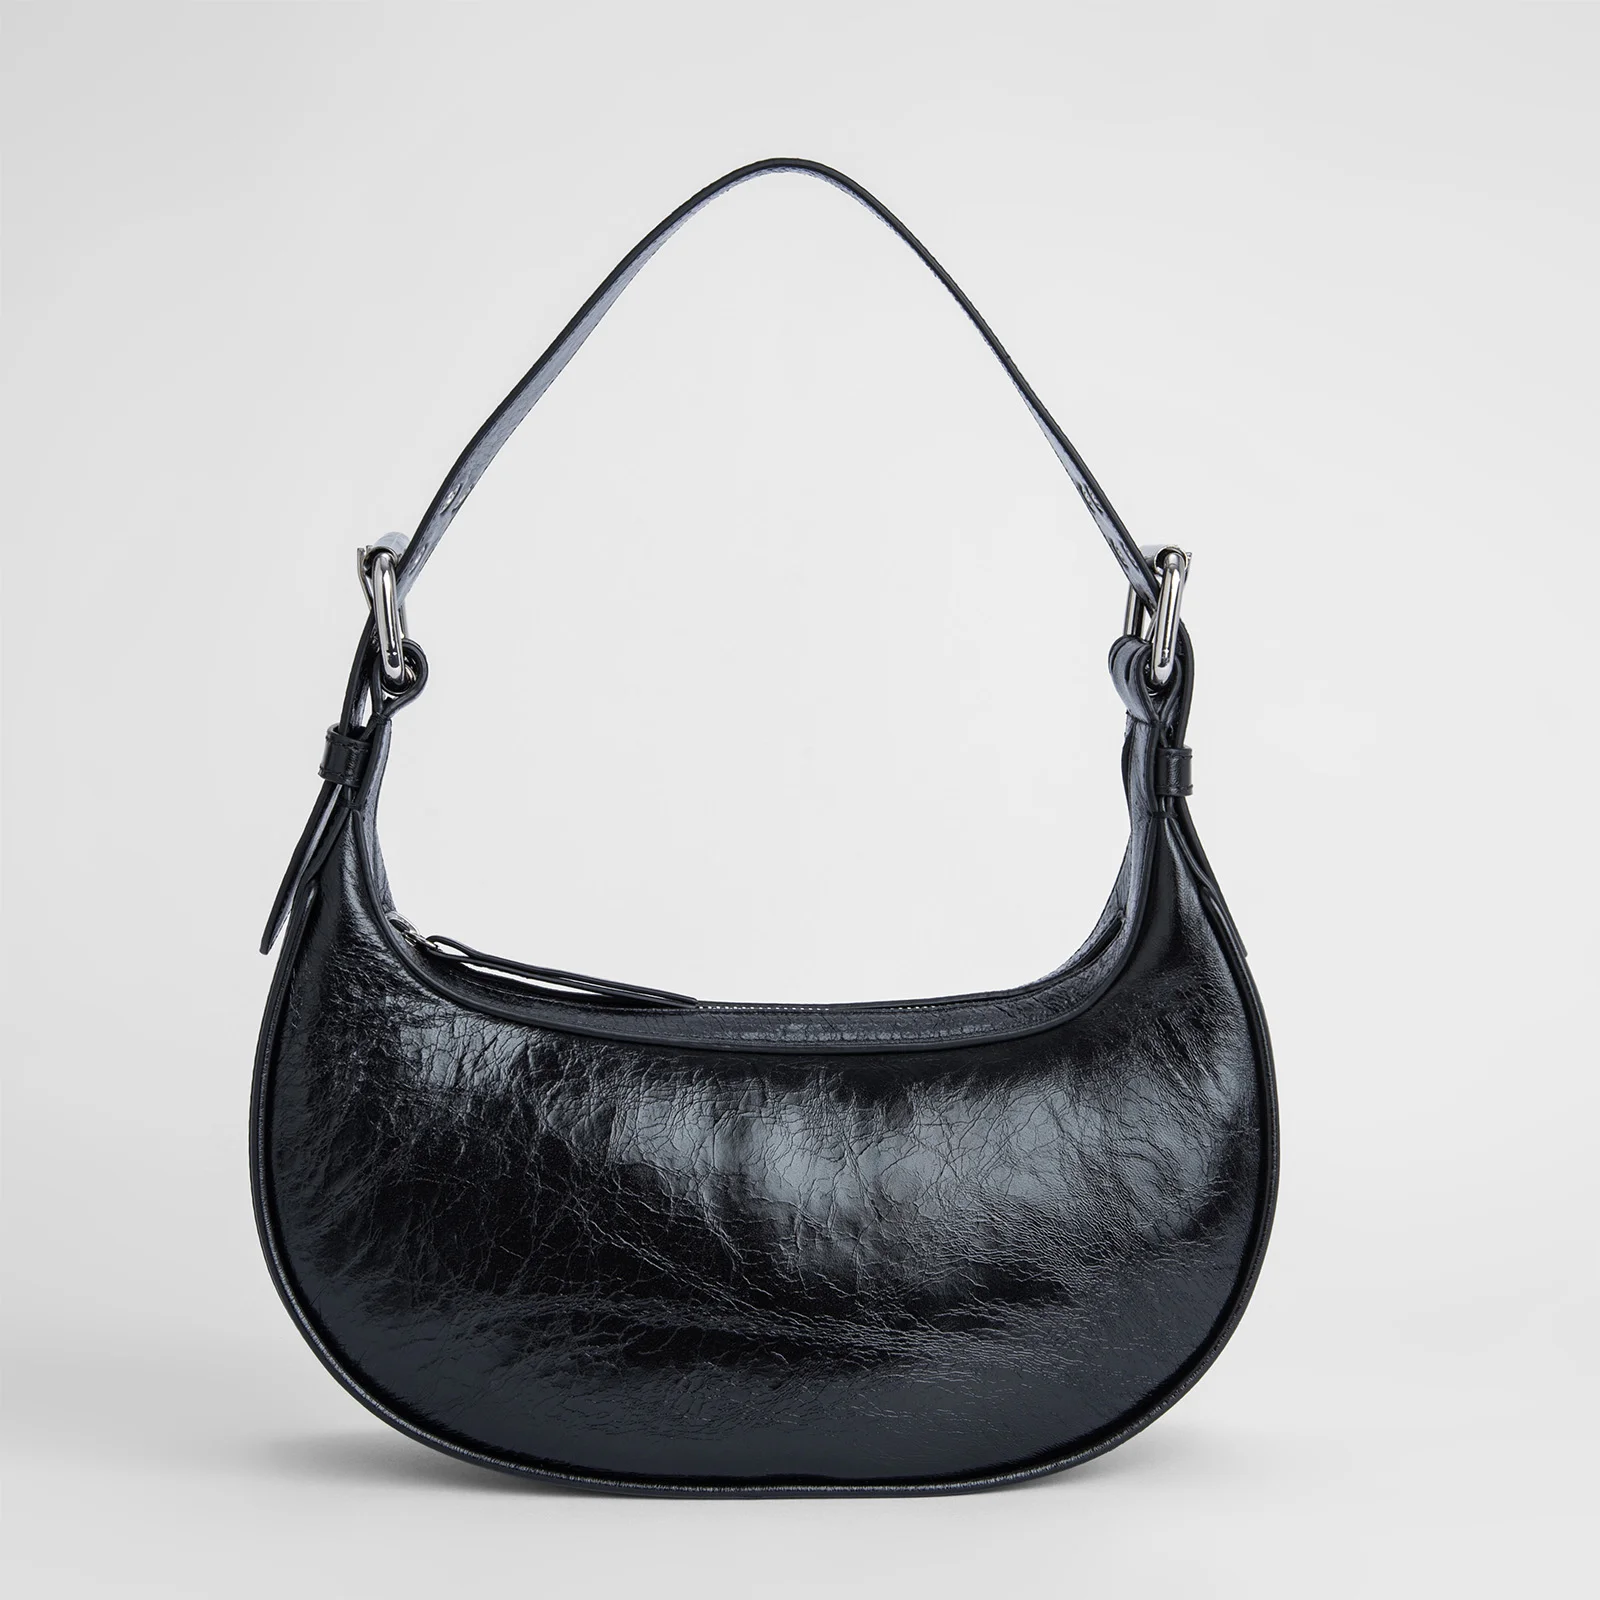 BY FAR Women's Soho Grained Leather Shoulder Bag - Black Image 1